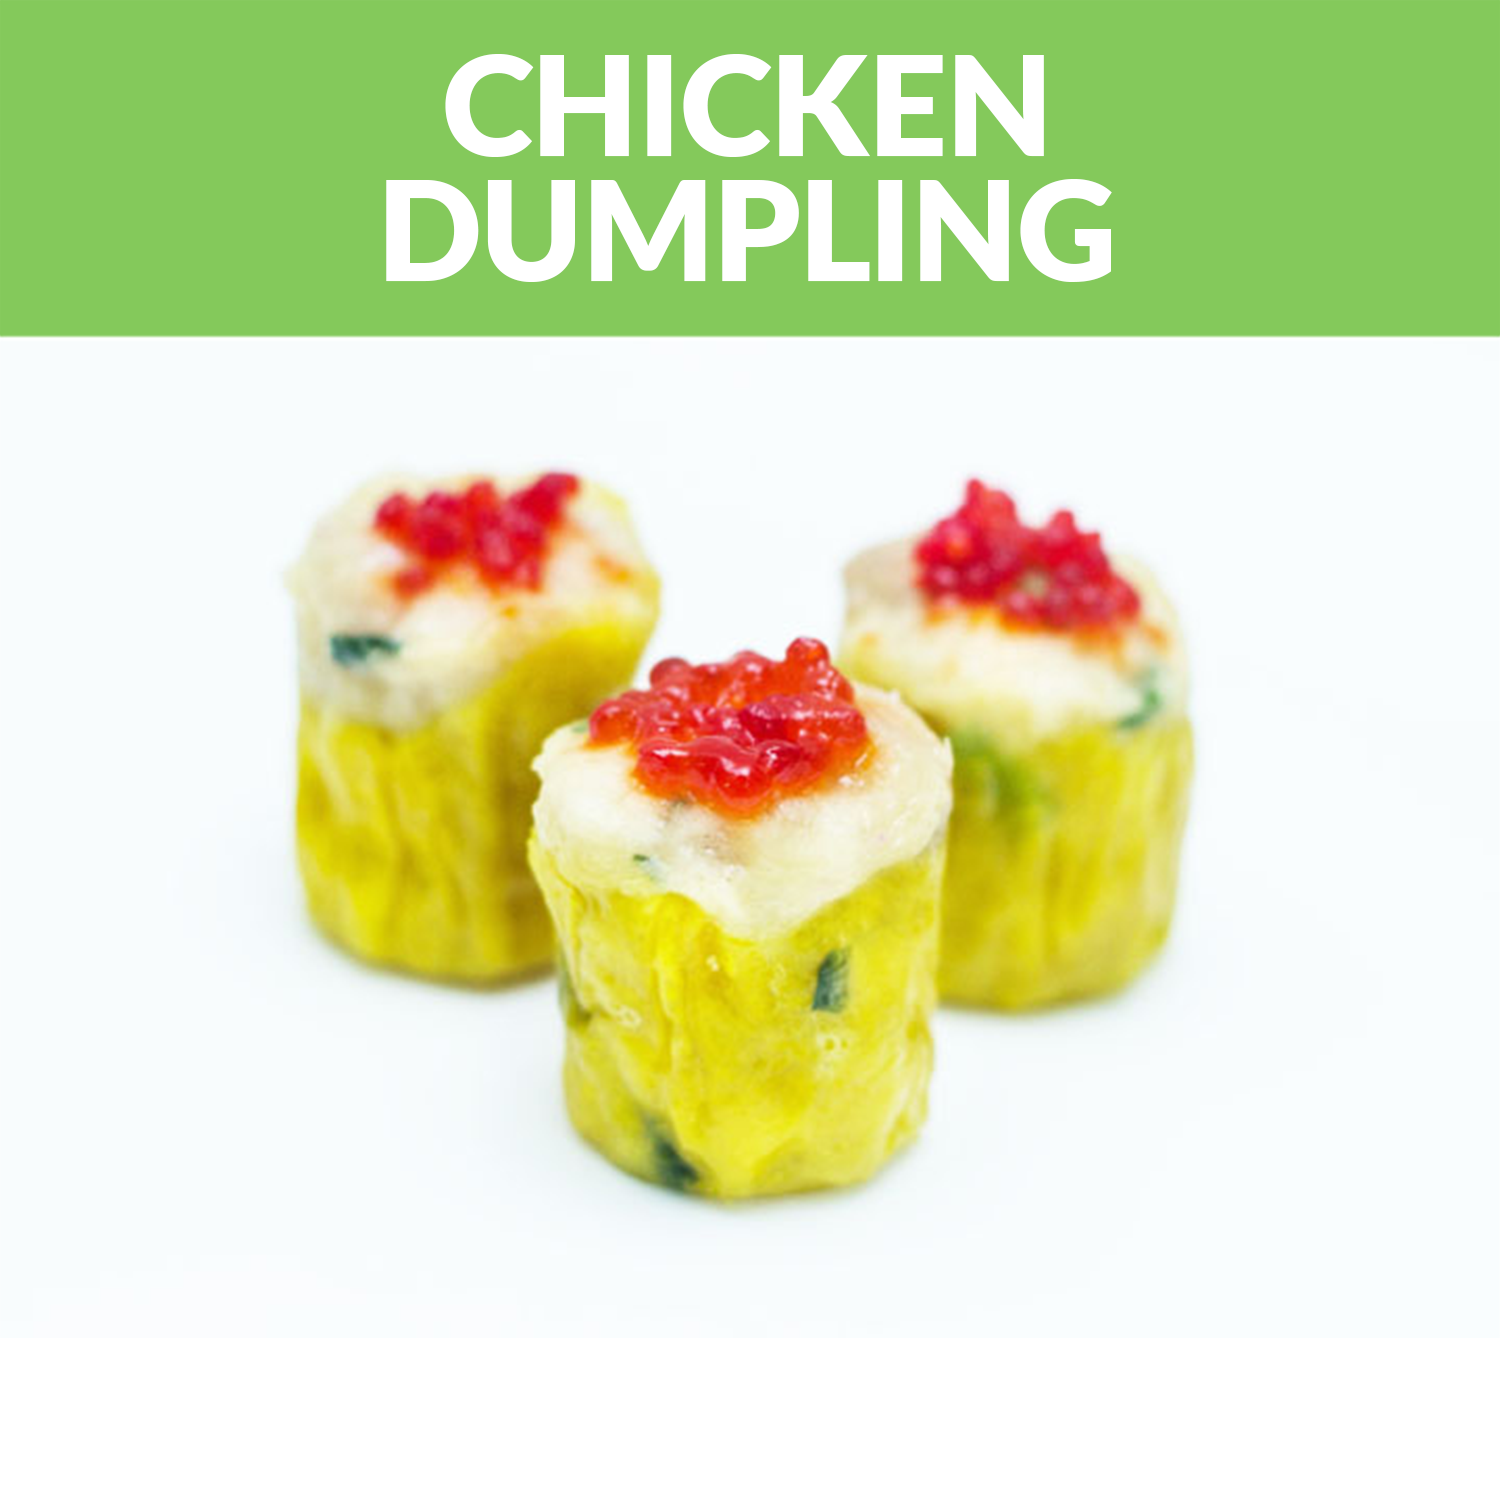 Products-Dumpling-Chicken-Dumpling.png